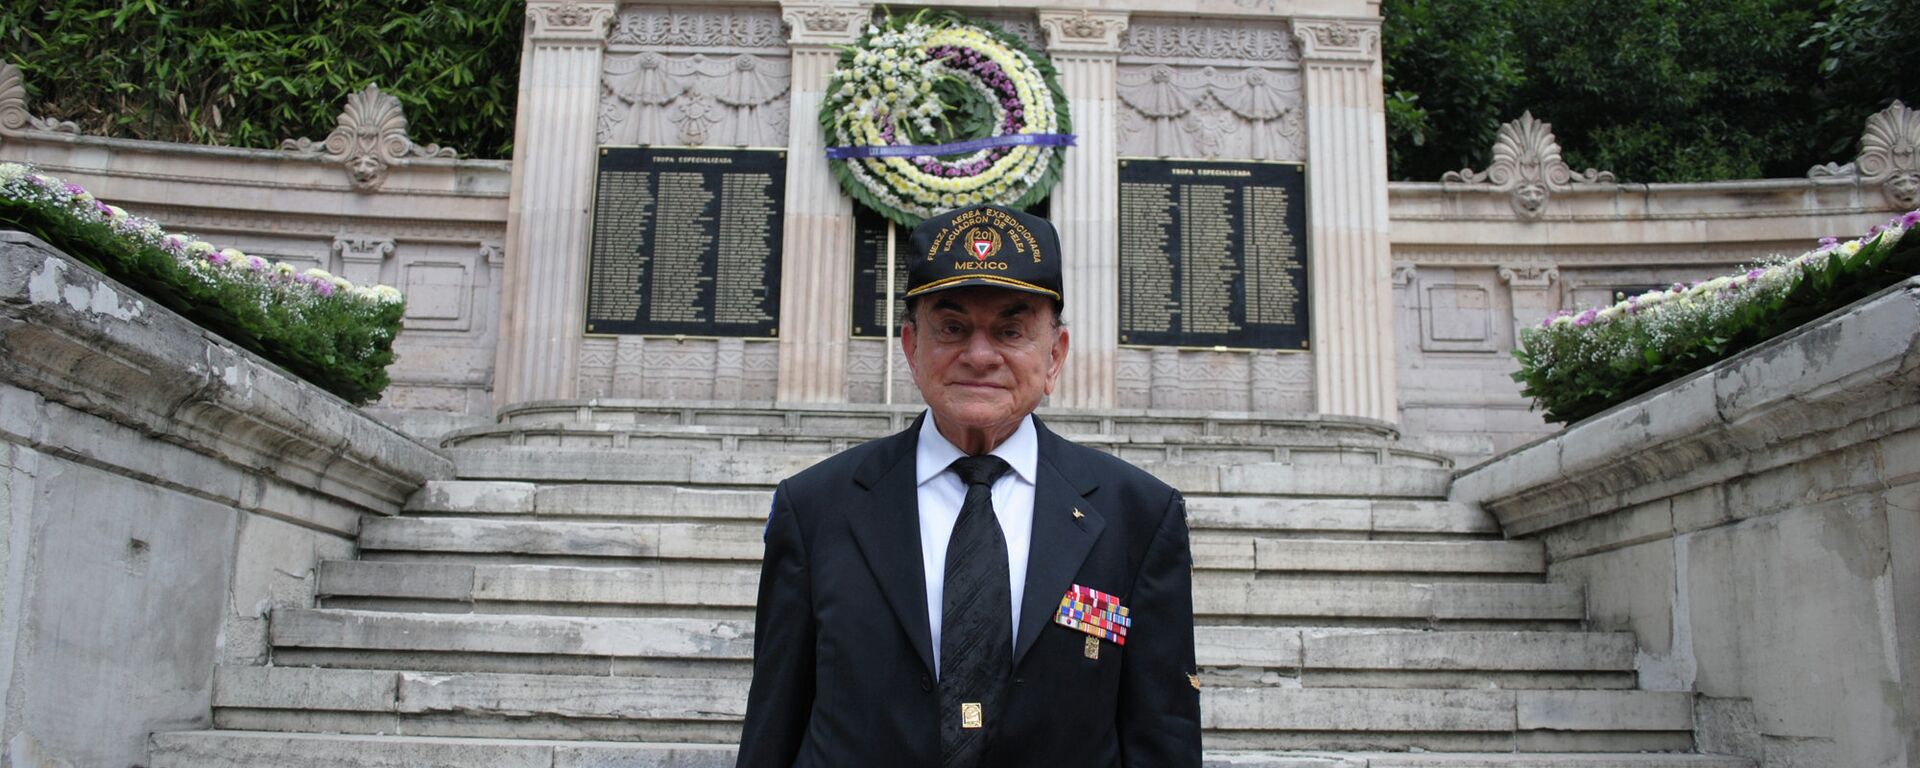 Fernando Nava, veterano del escuadrón aéreo mexicano - Sputnik Mundo, 1920, 07.05.2015